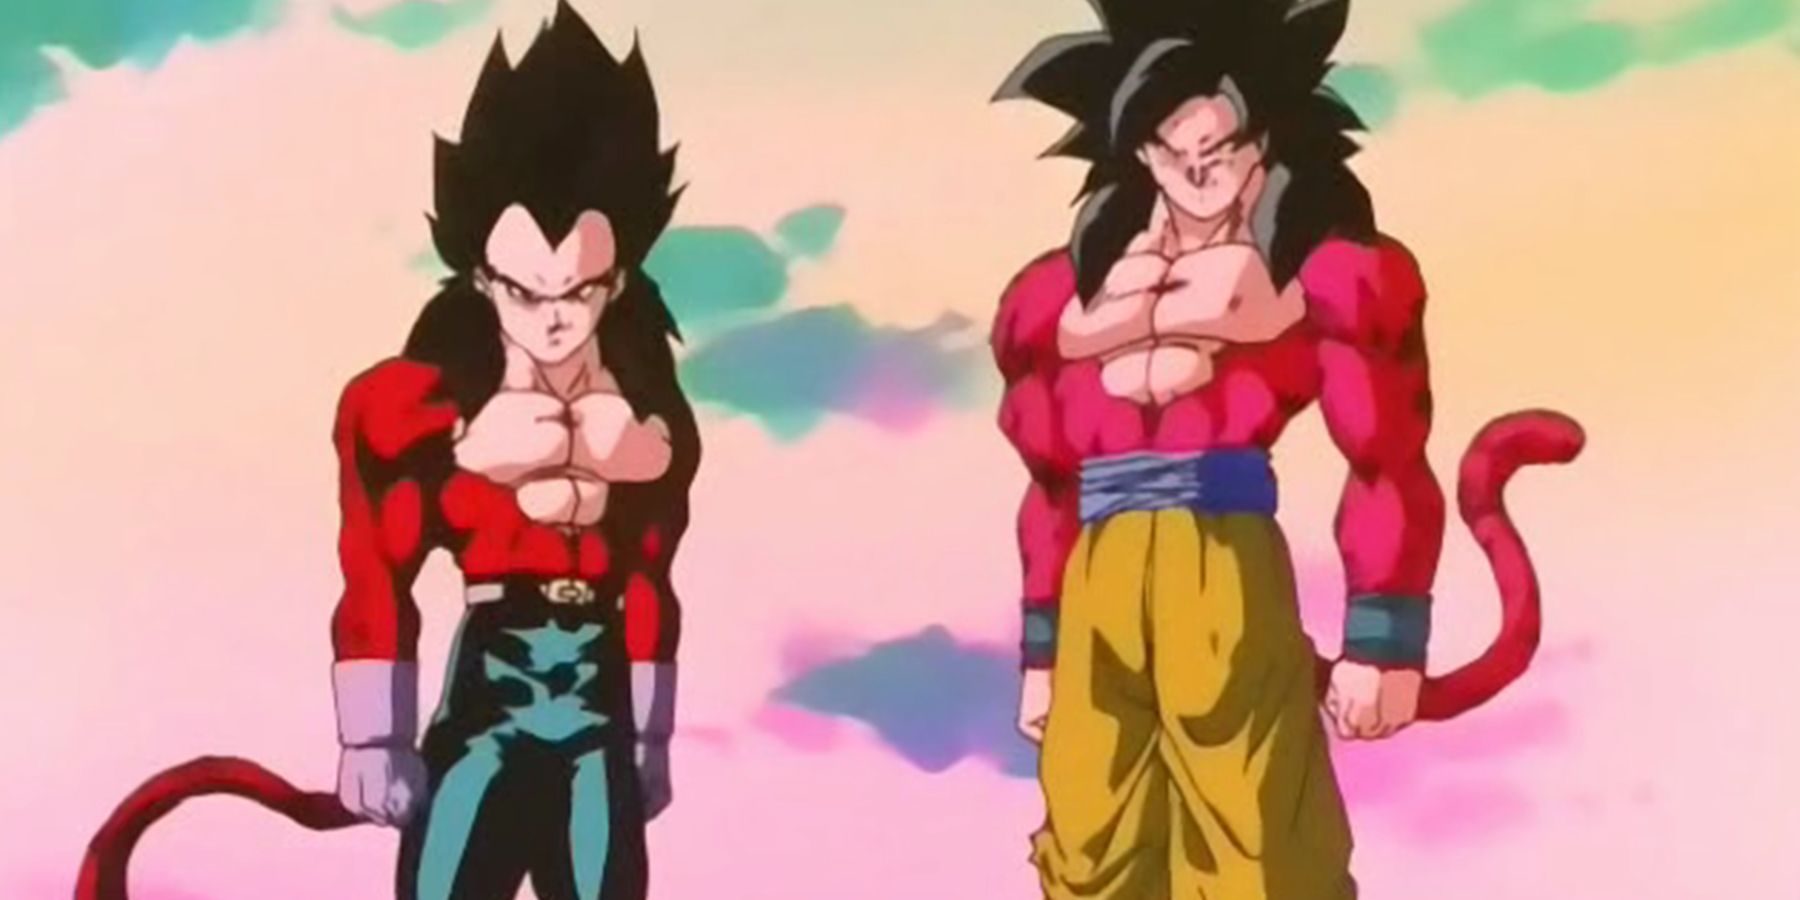 Super Saiyan 4 Goku and Vegeta assess the situation in Dragon Ball GT